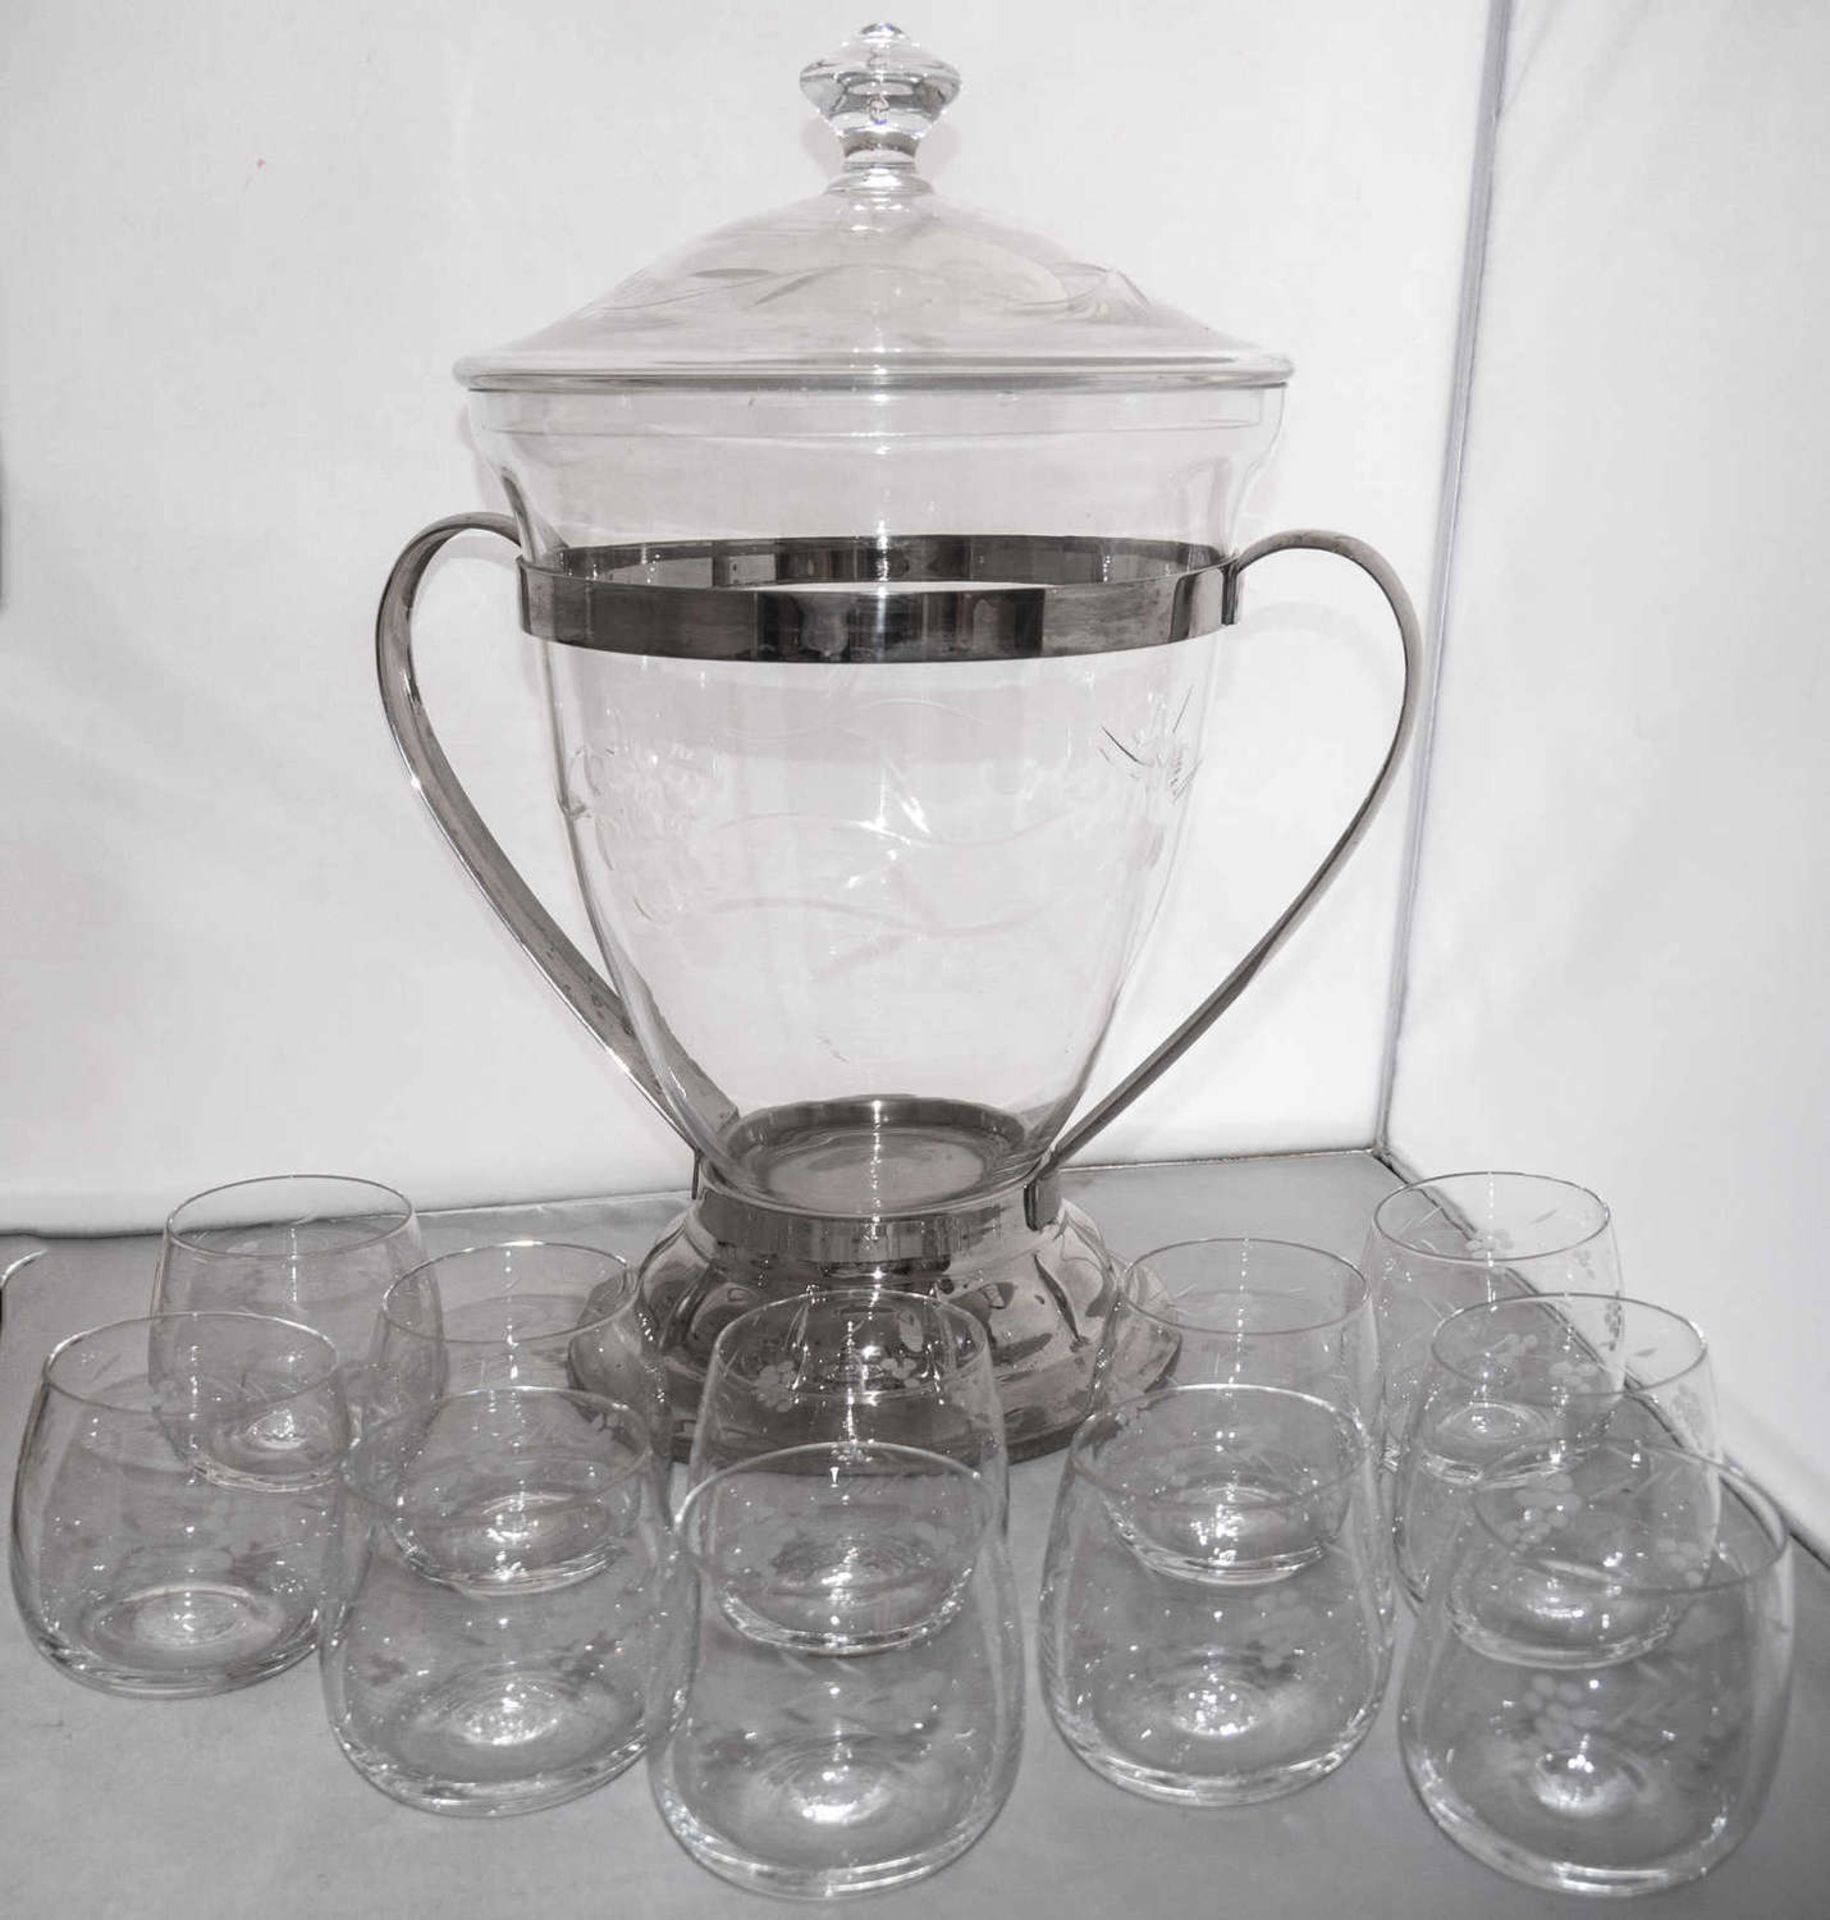 Bowle - Pokal, Glasbehälter mit Deckel (keiner Chip) in Metall - Montur. Höhe: ca. 40 cm,